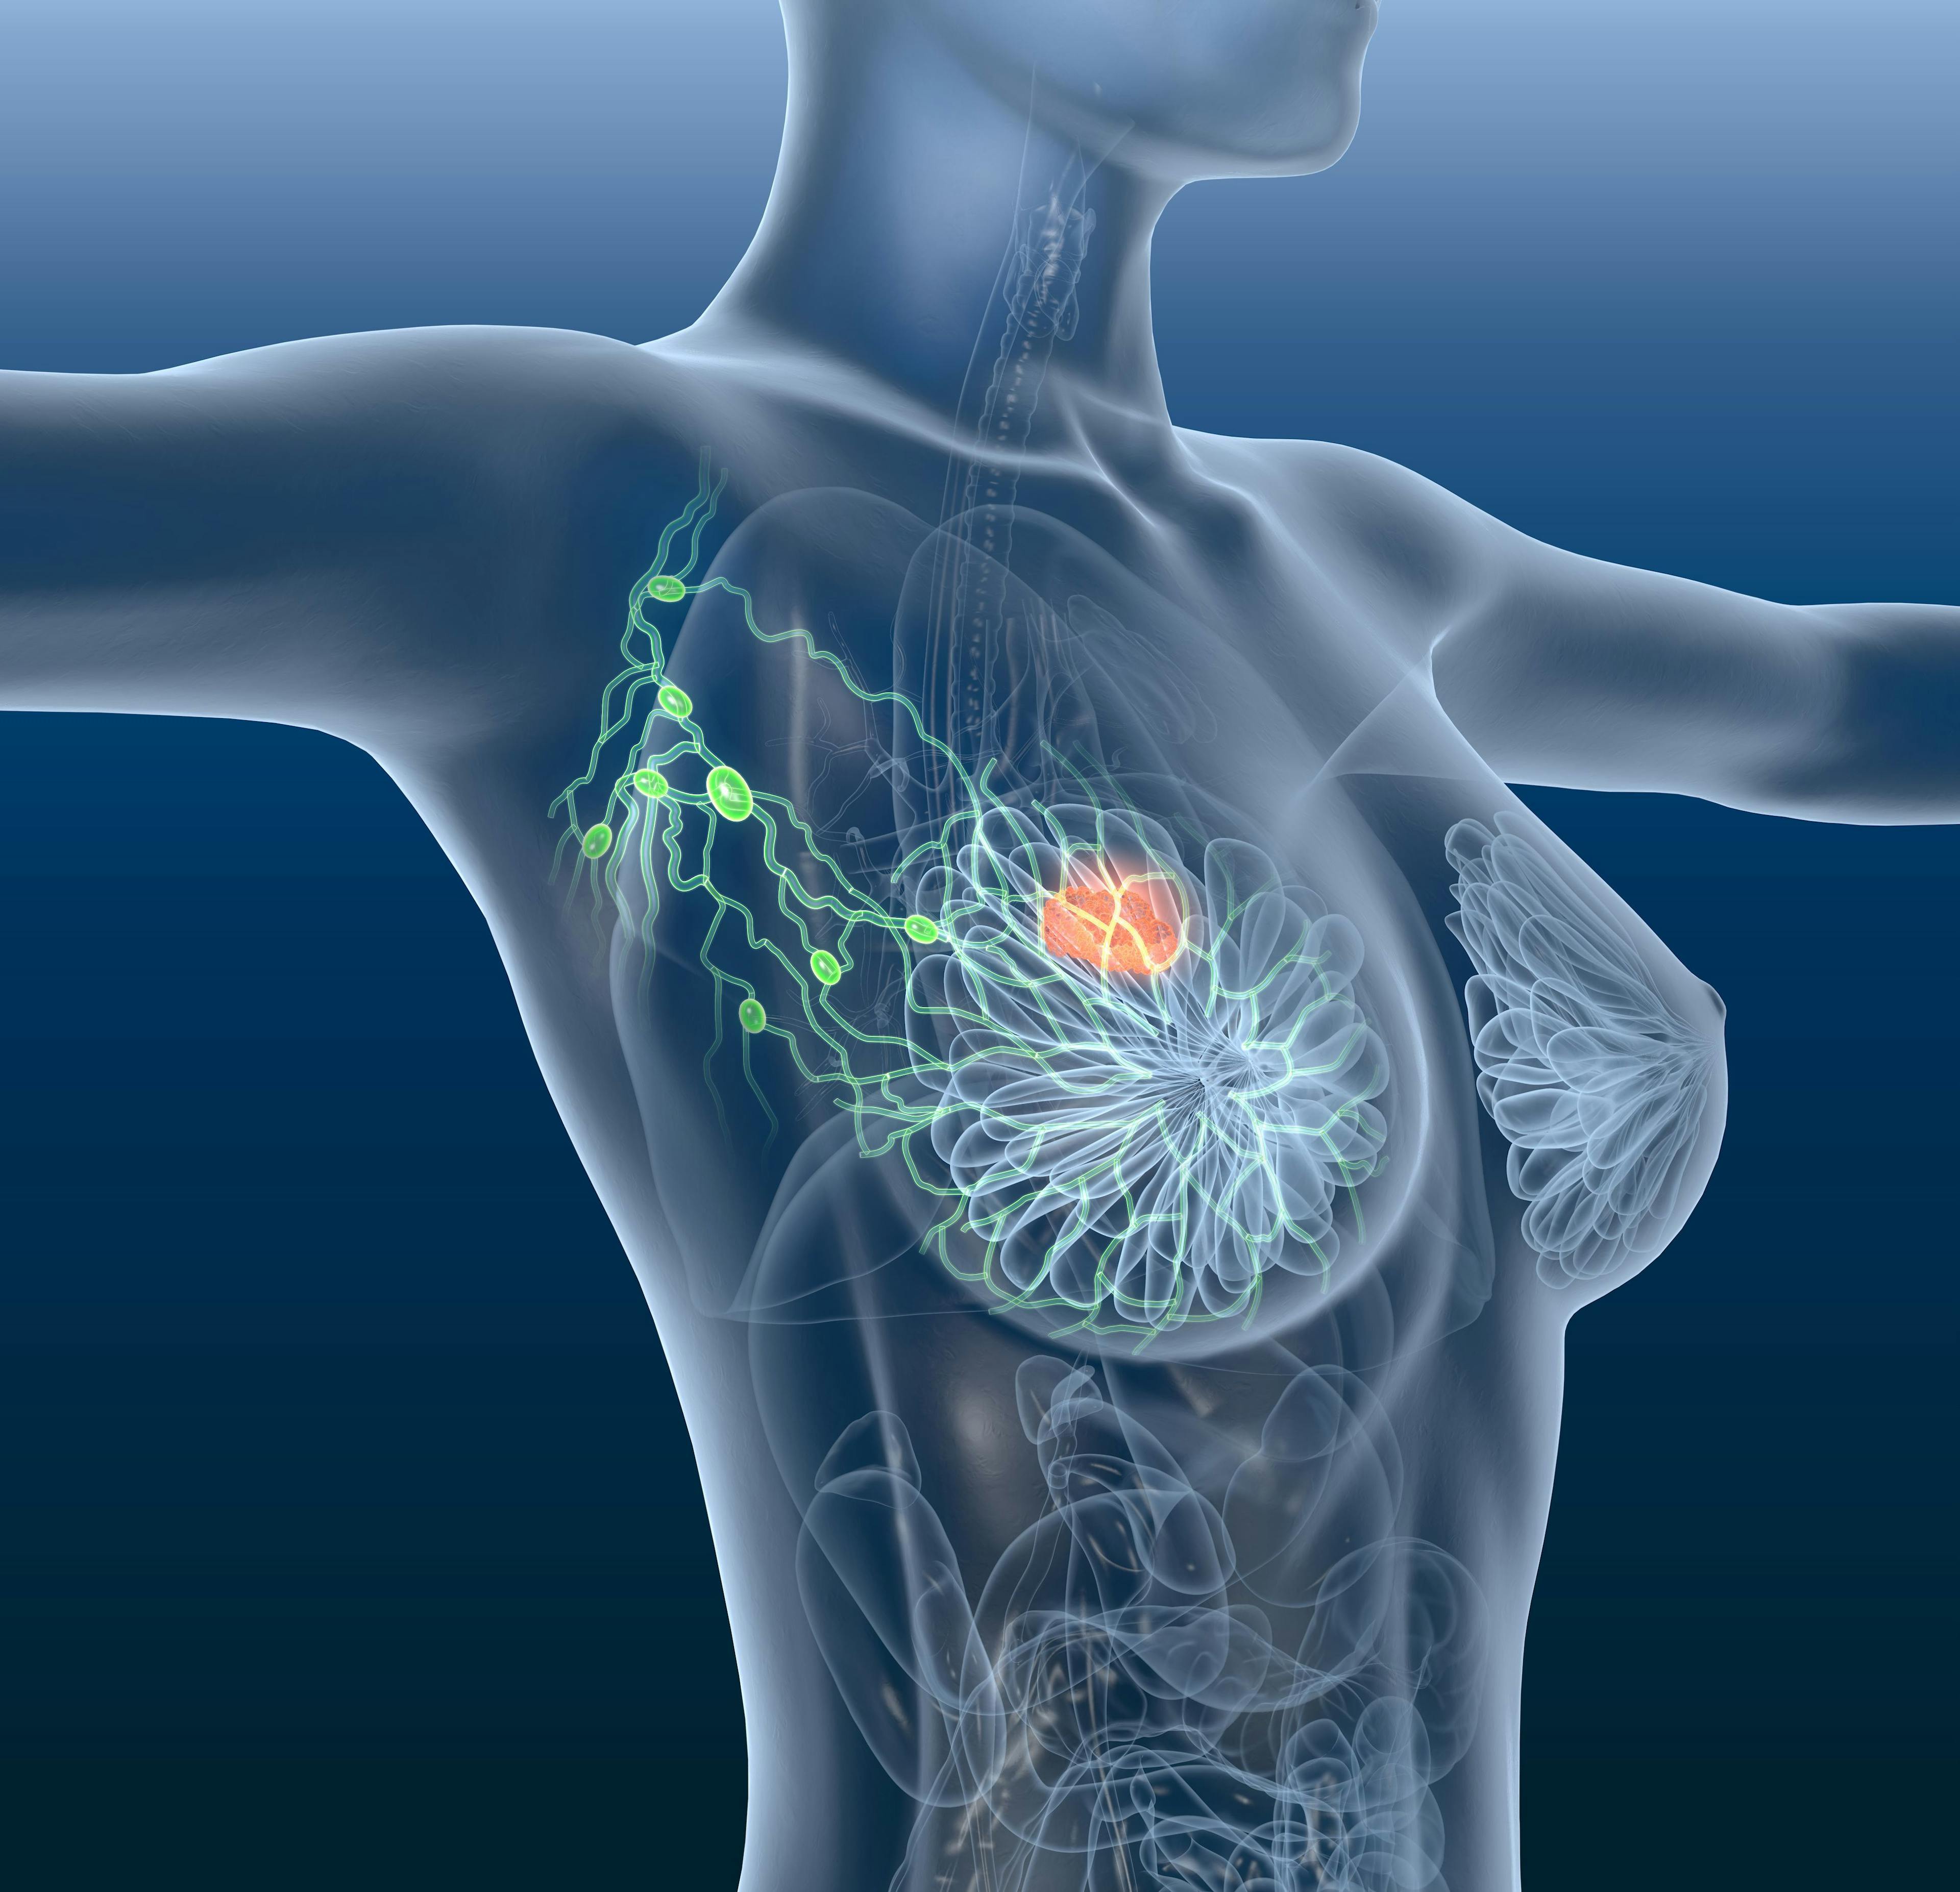 Breast cancer, lymphatics, mastocarcinoma | Image Credit: Axel Kock - stock.adobe.com